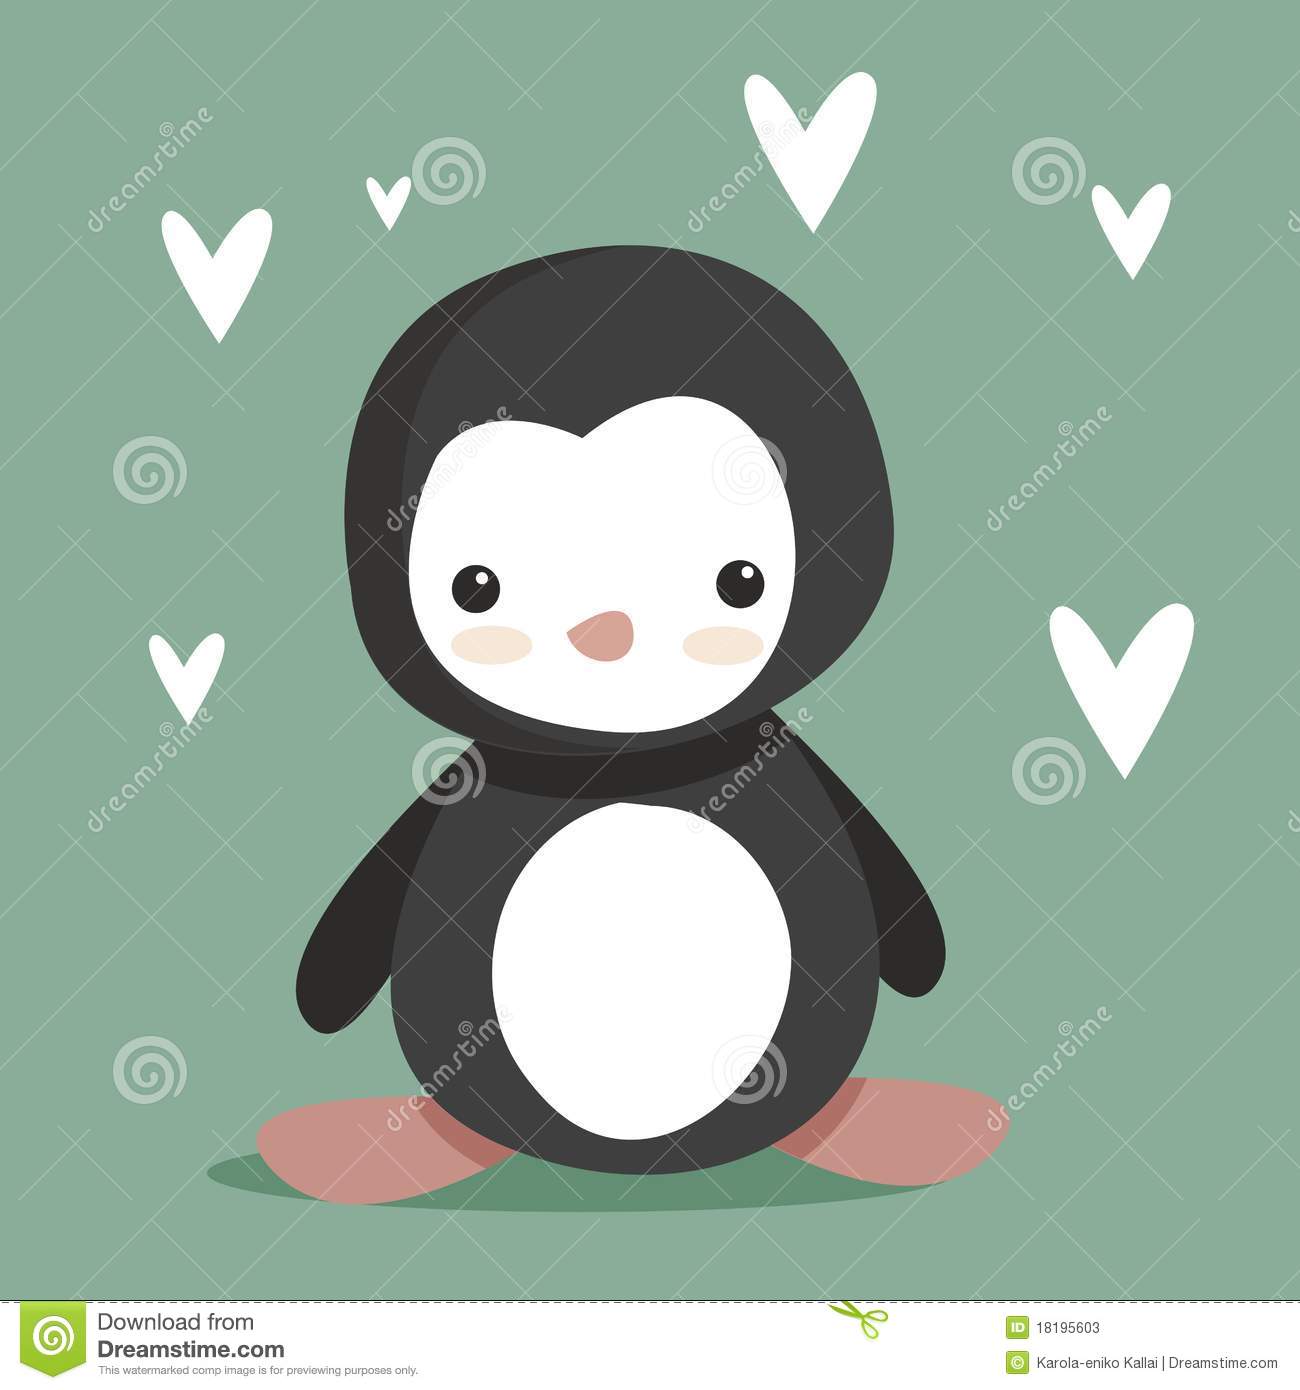 Cute Penguin Stock Photos   Image  18195603